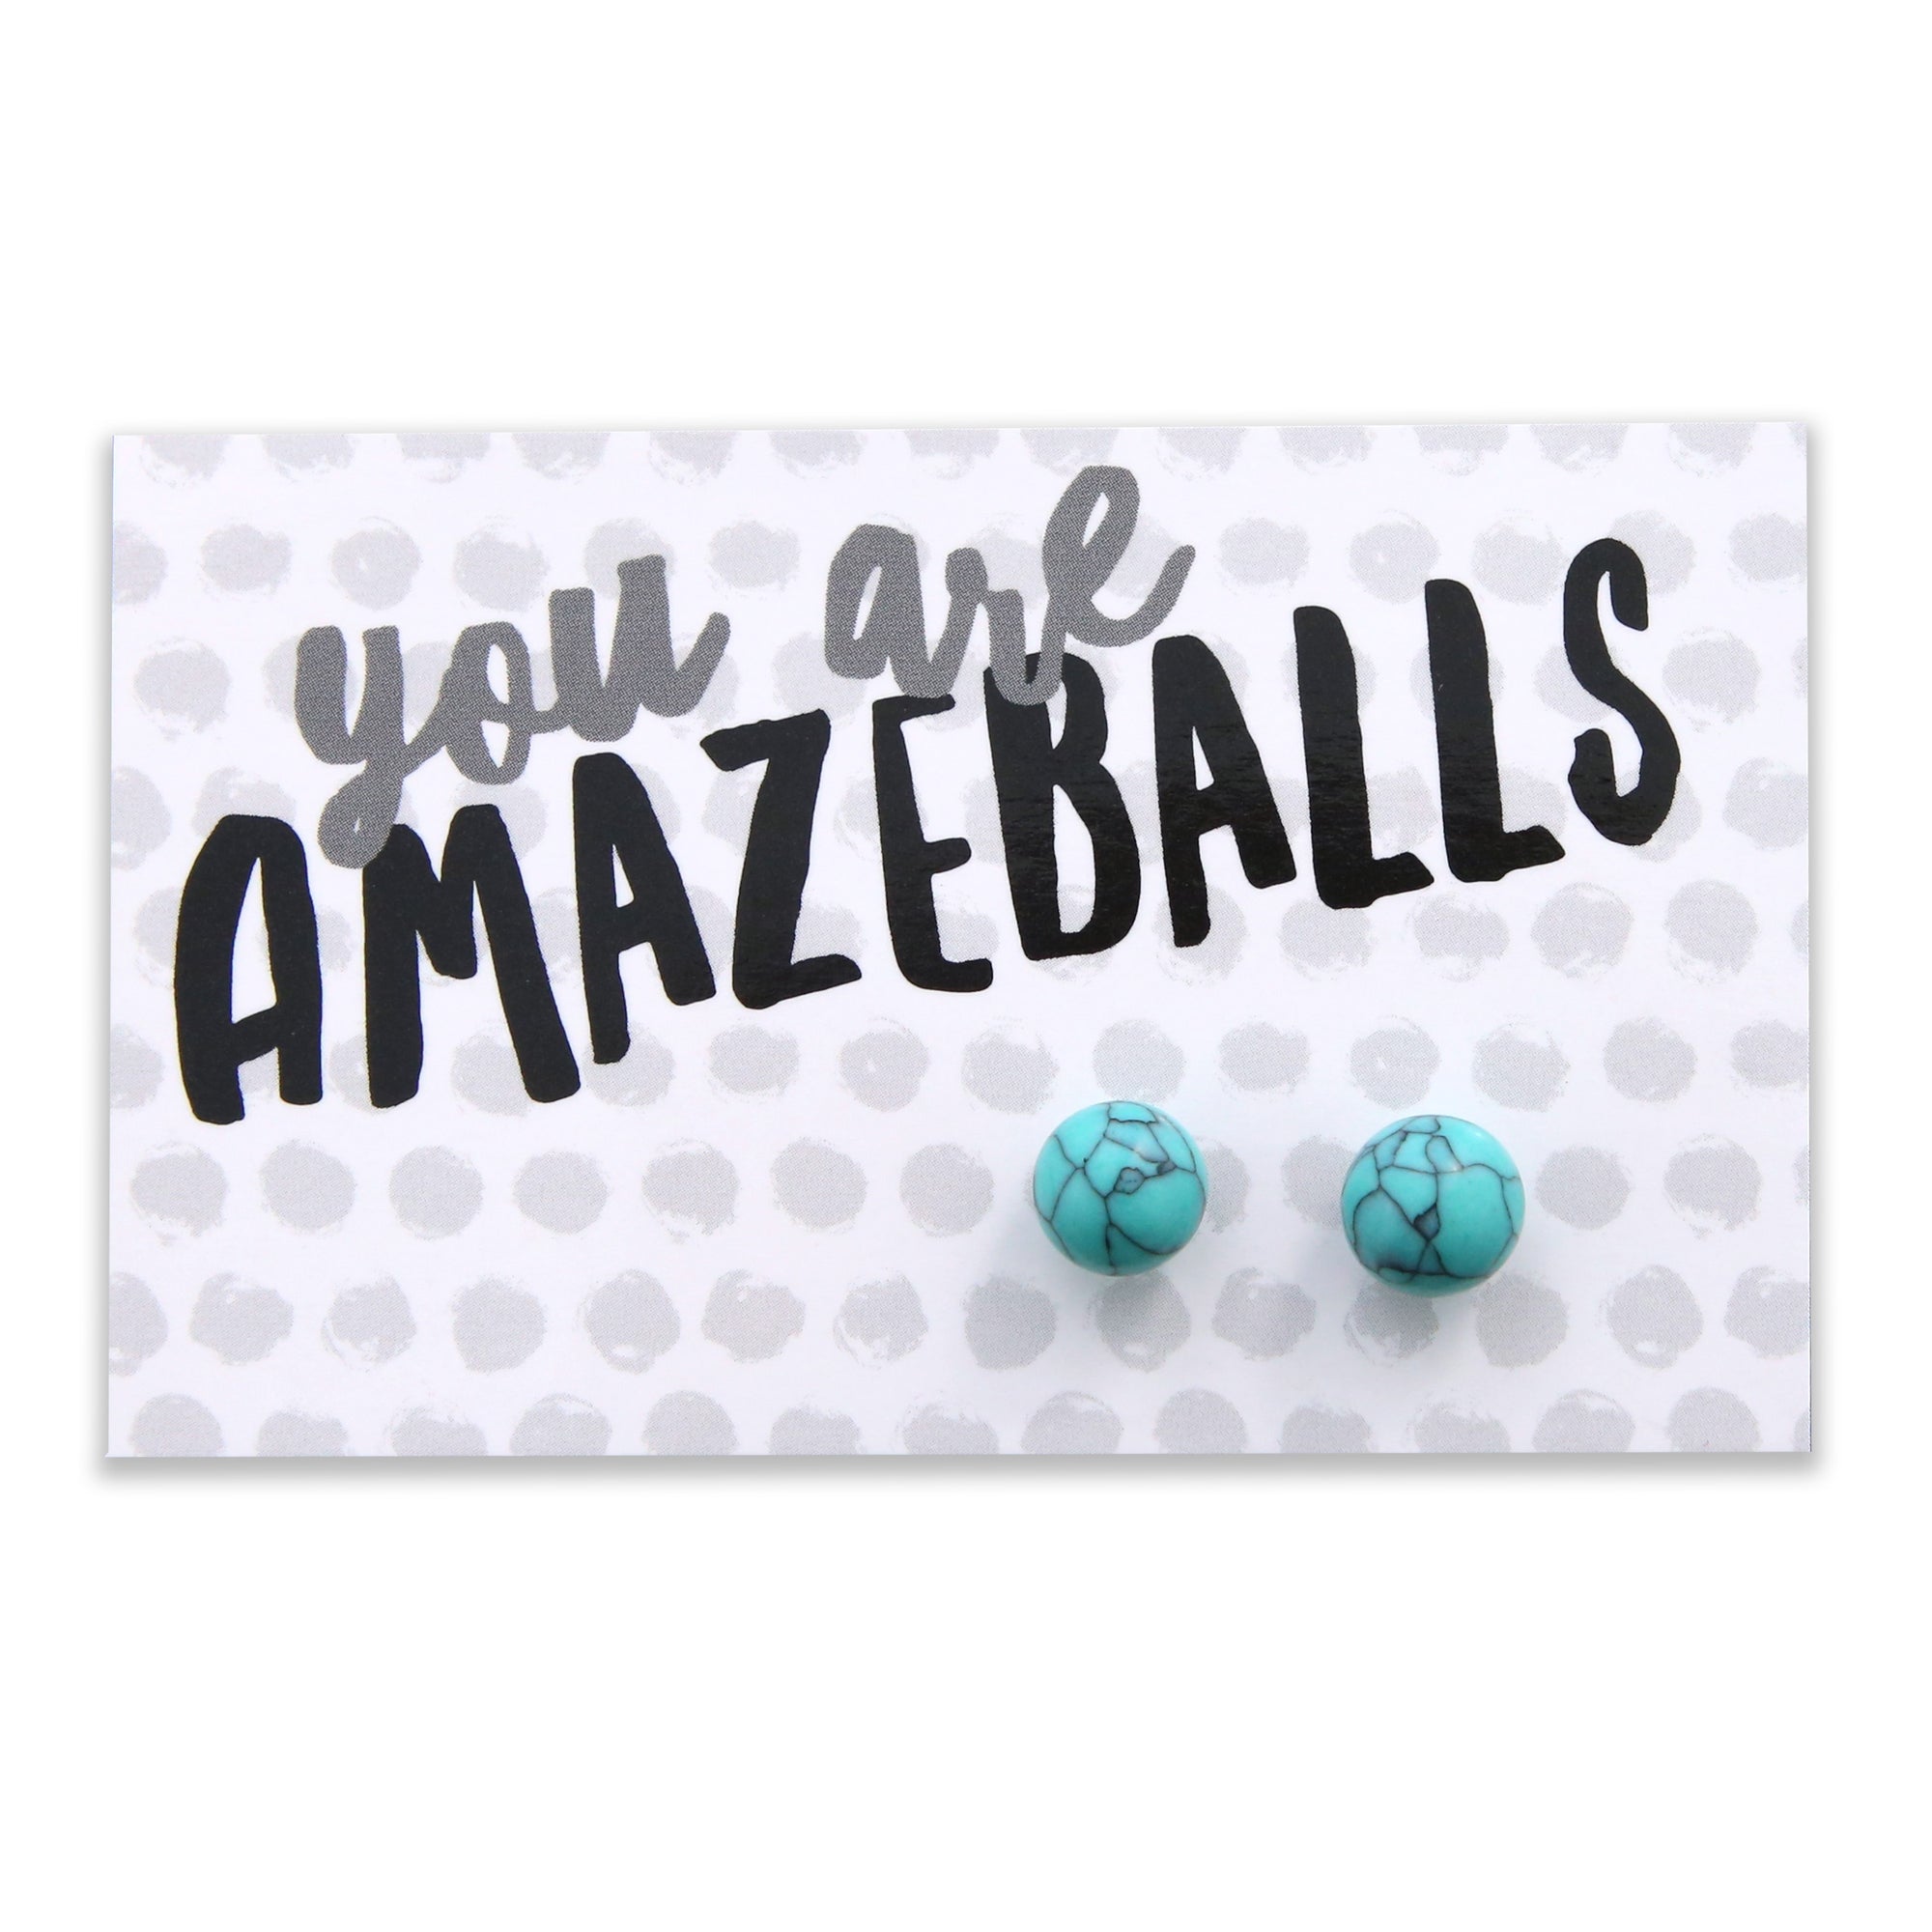 You Are Amazeballs! - Turquoise Stone Ball Earrings (8608)